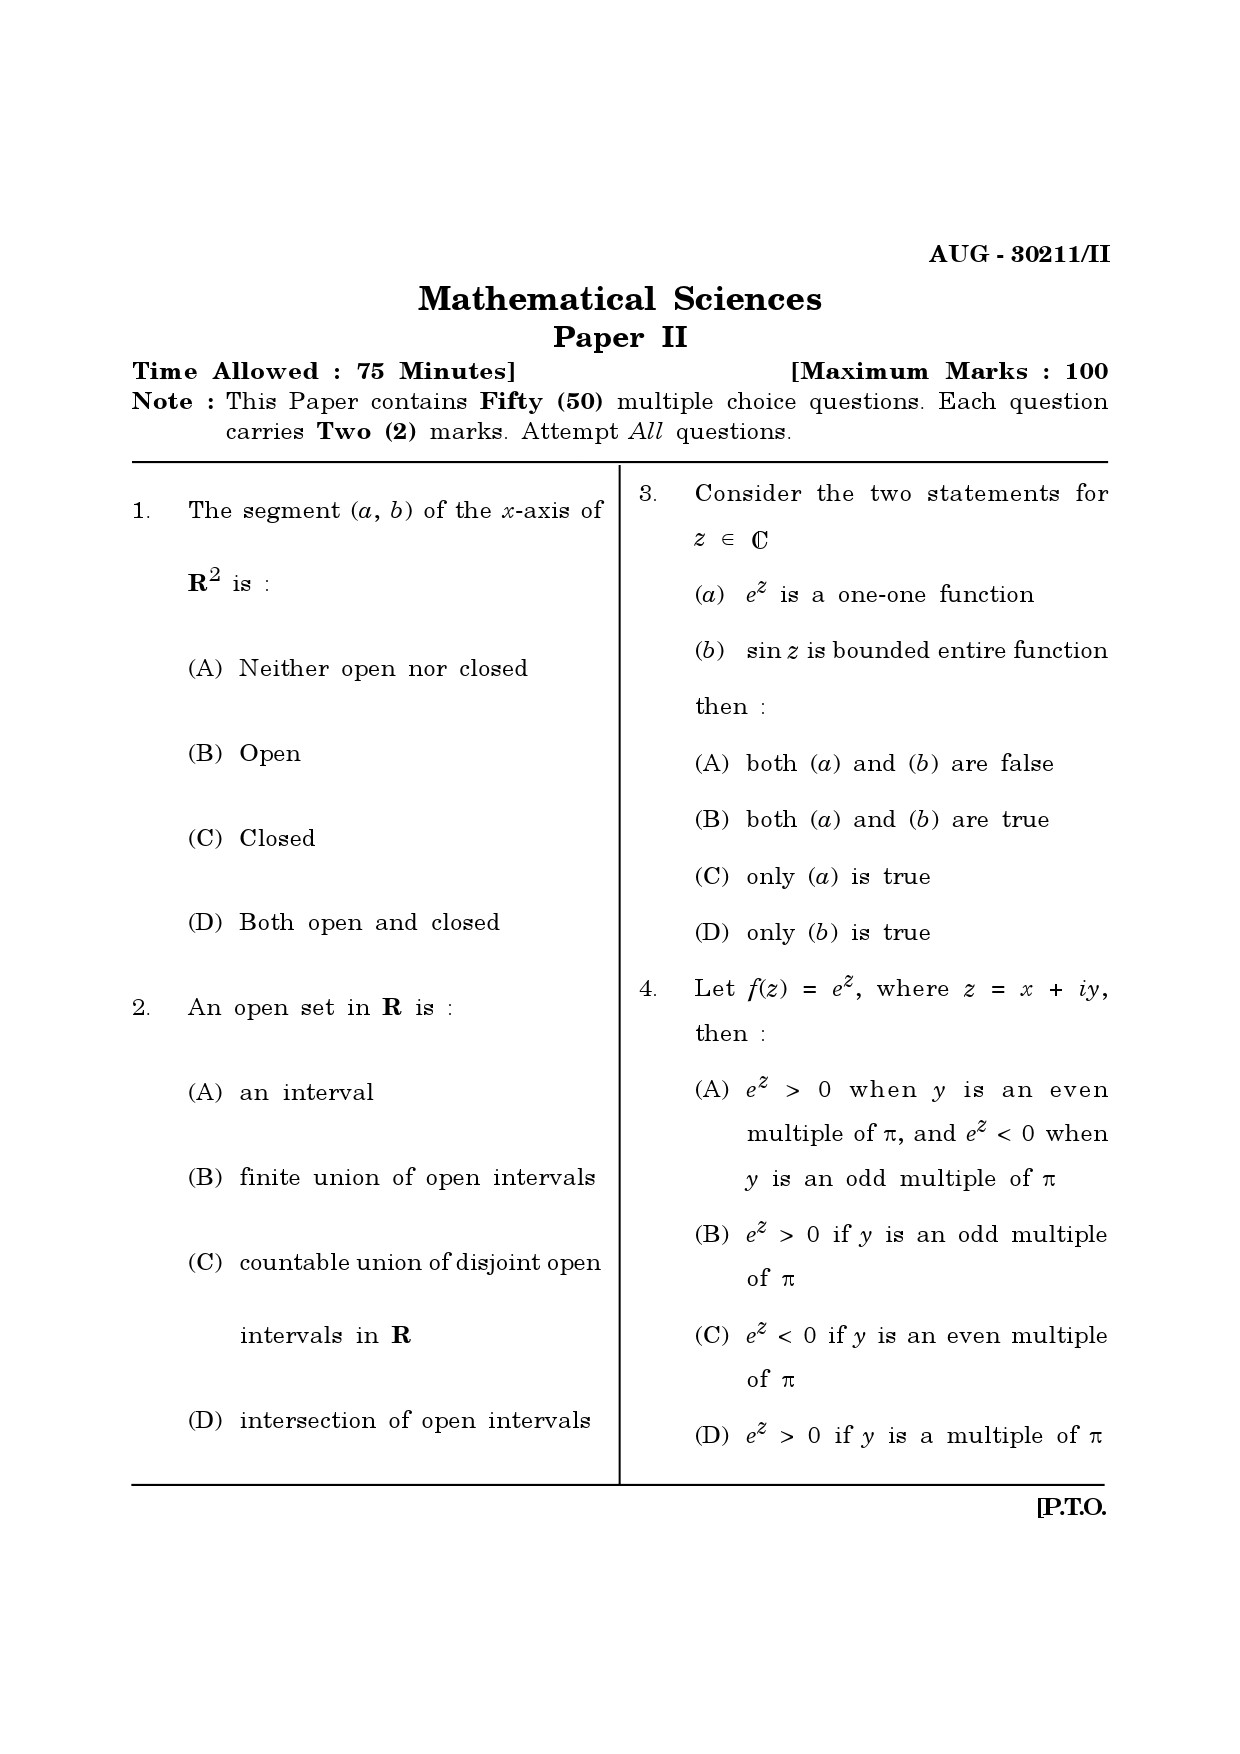 Maharashtra SET Mathematical Sciences Question Paper II August 2011 1